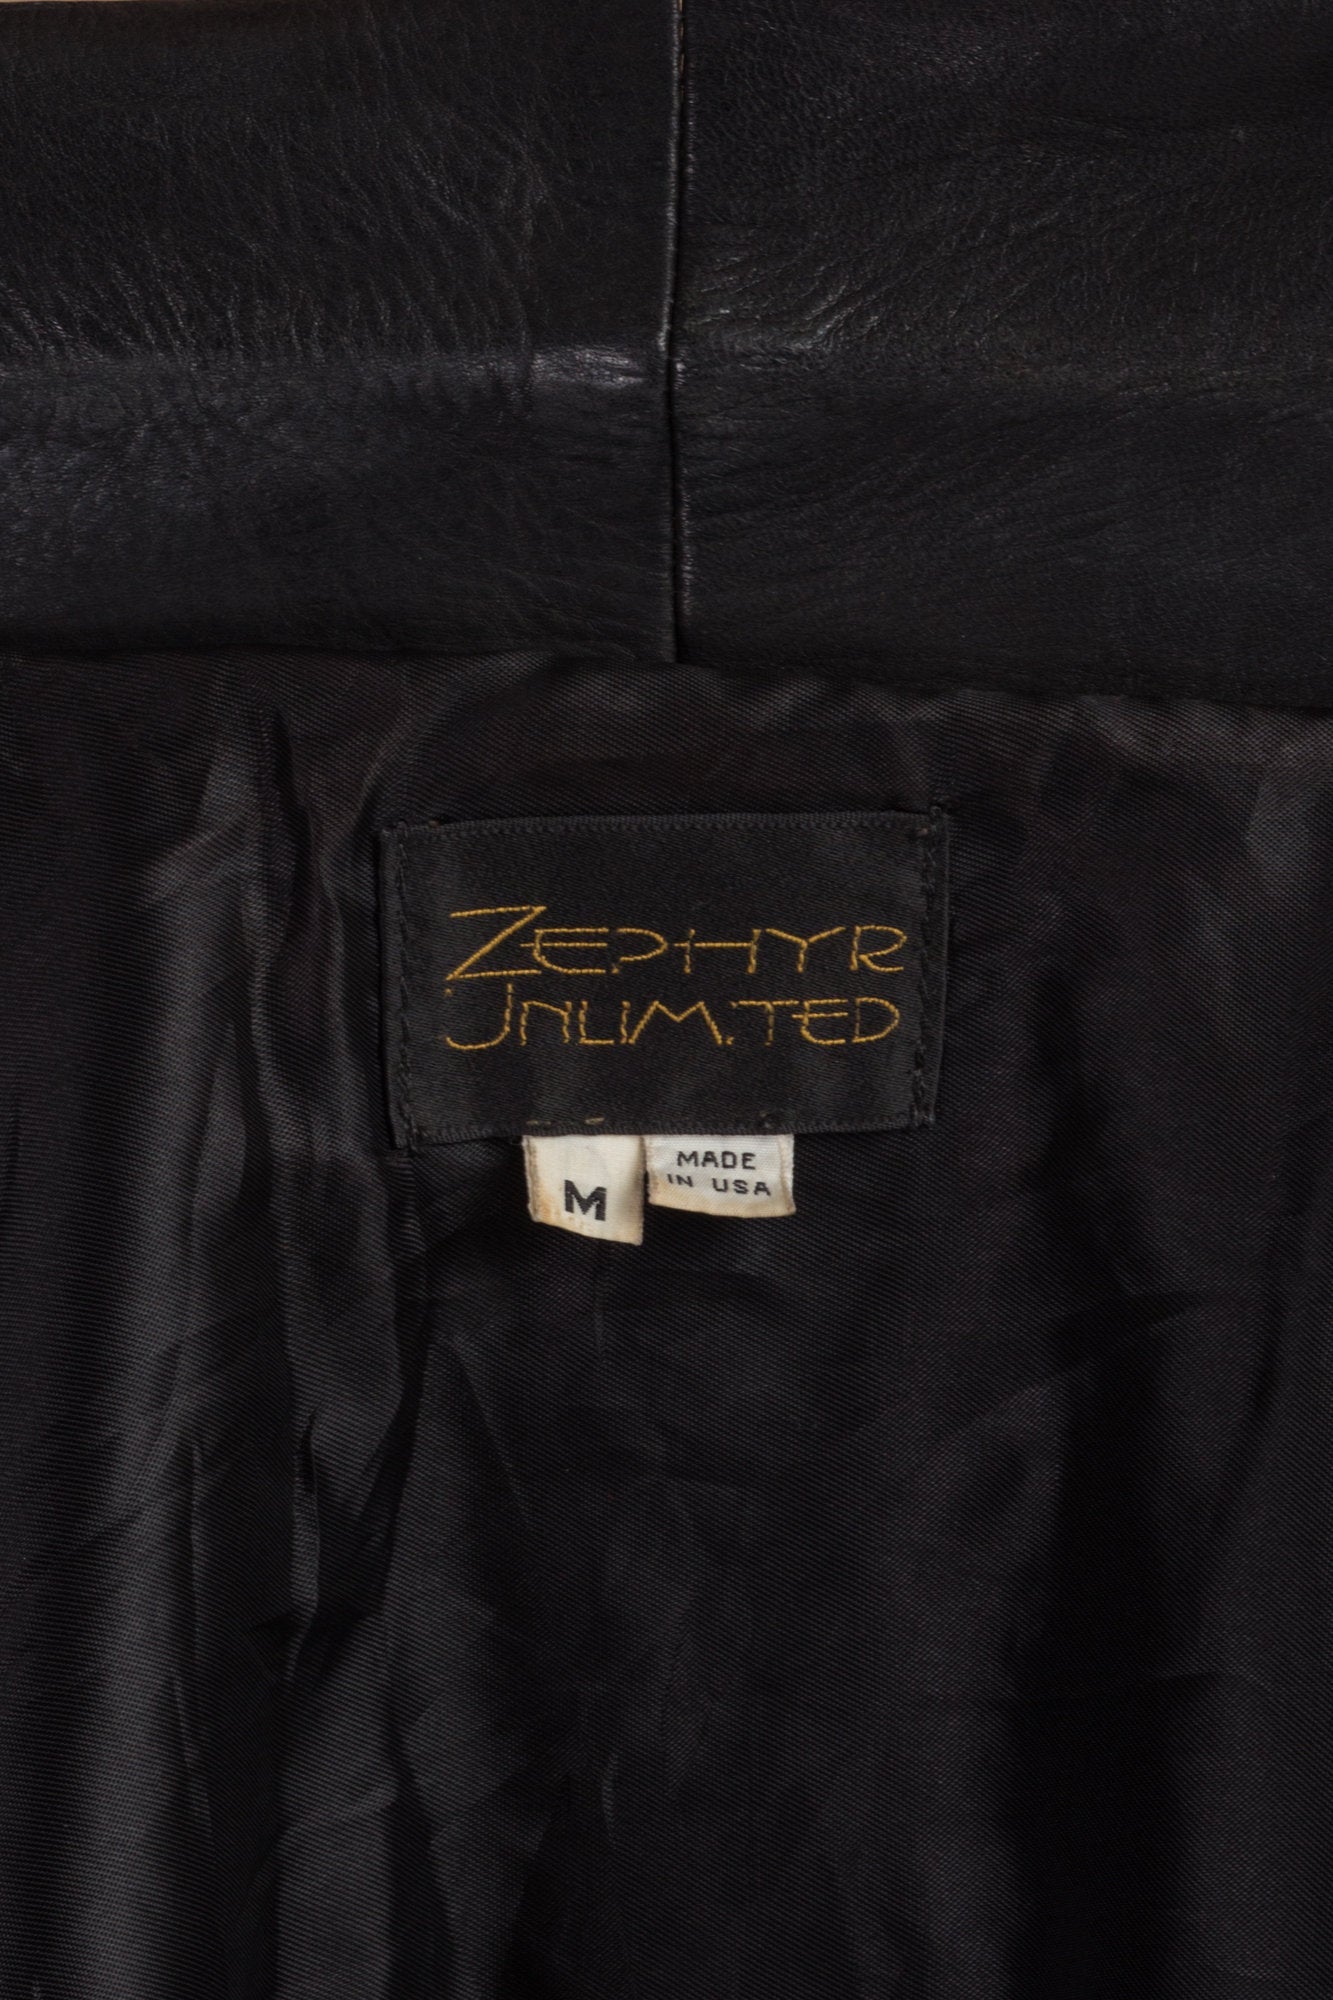 90s Zephyr Unlimited Raw Edge Cropped Leather Jacket - Medium